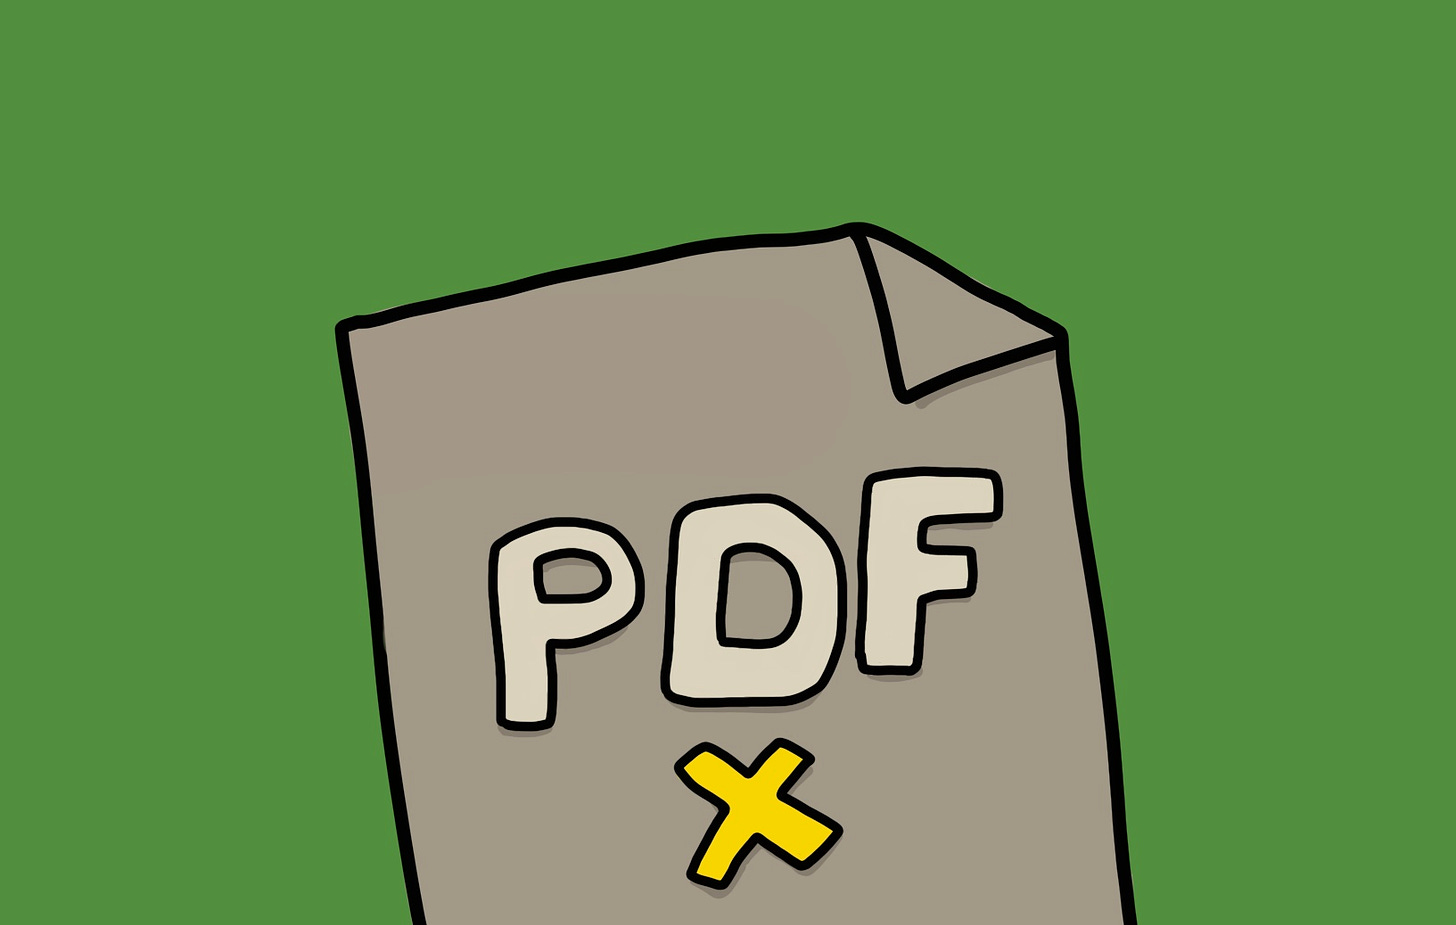 Cartoon gravestone that looks like a PDF